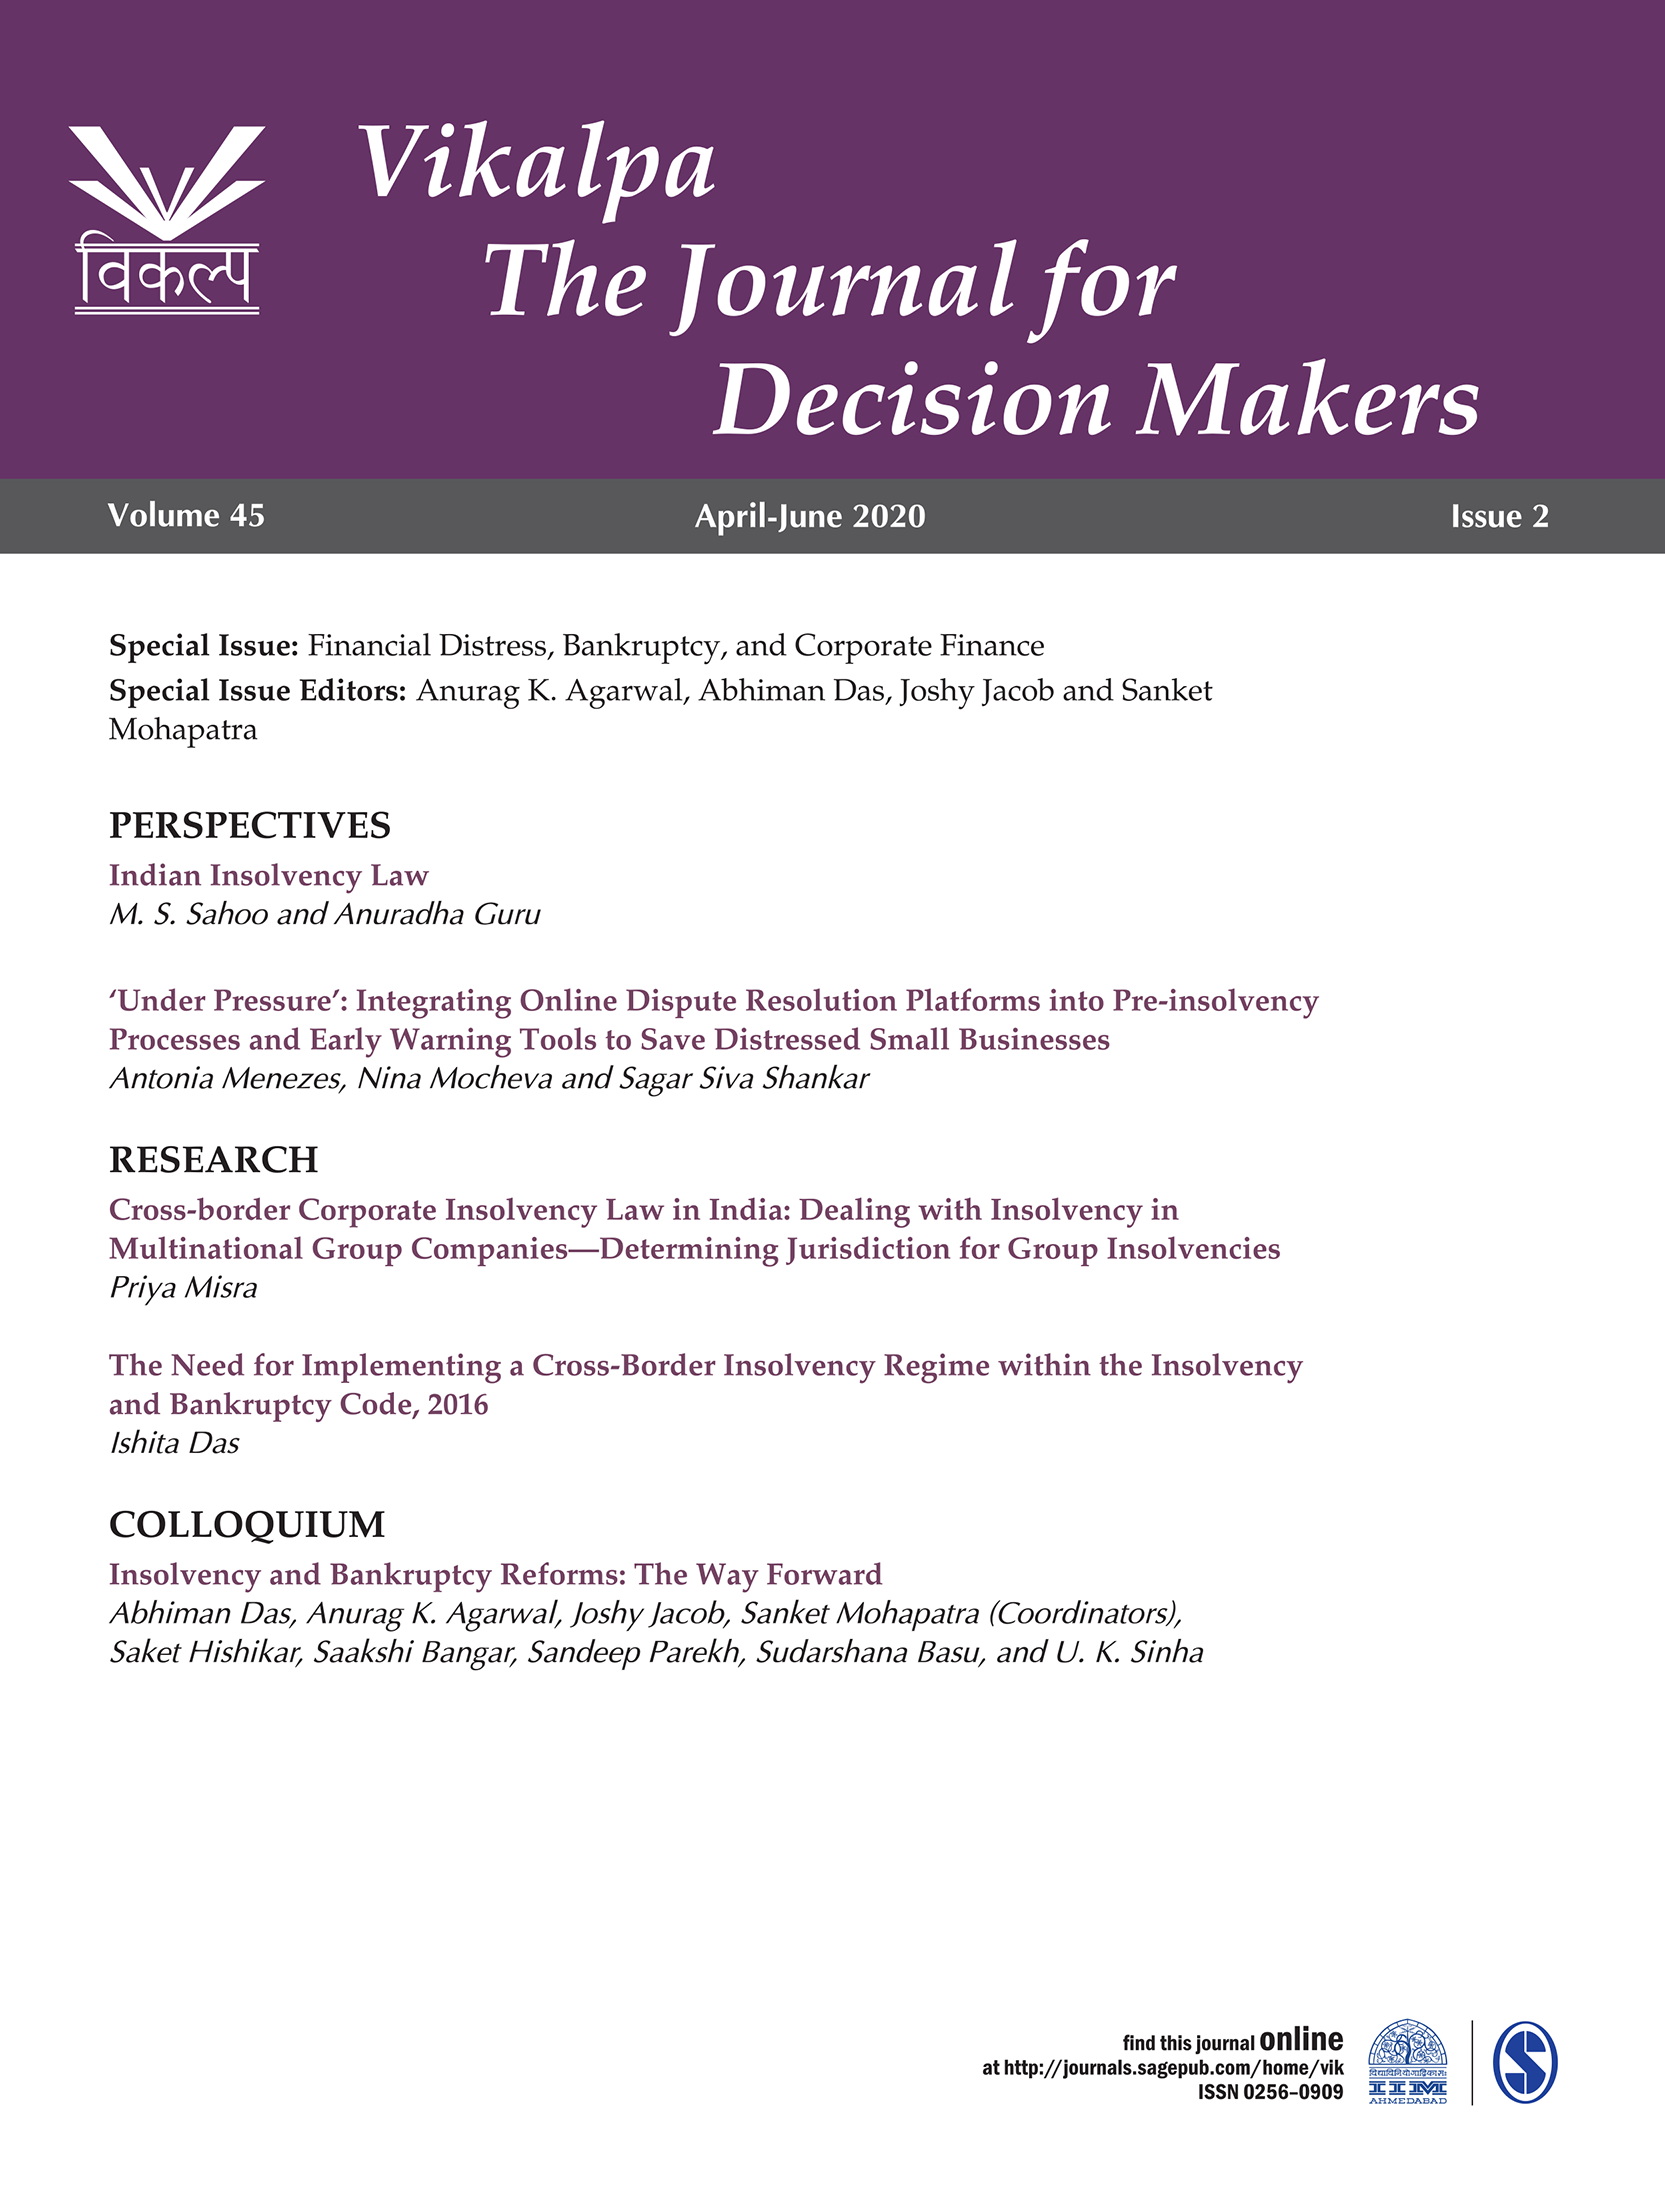 Vikalpa: The Journal for Decision Makers